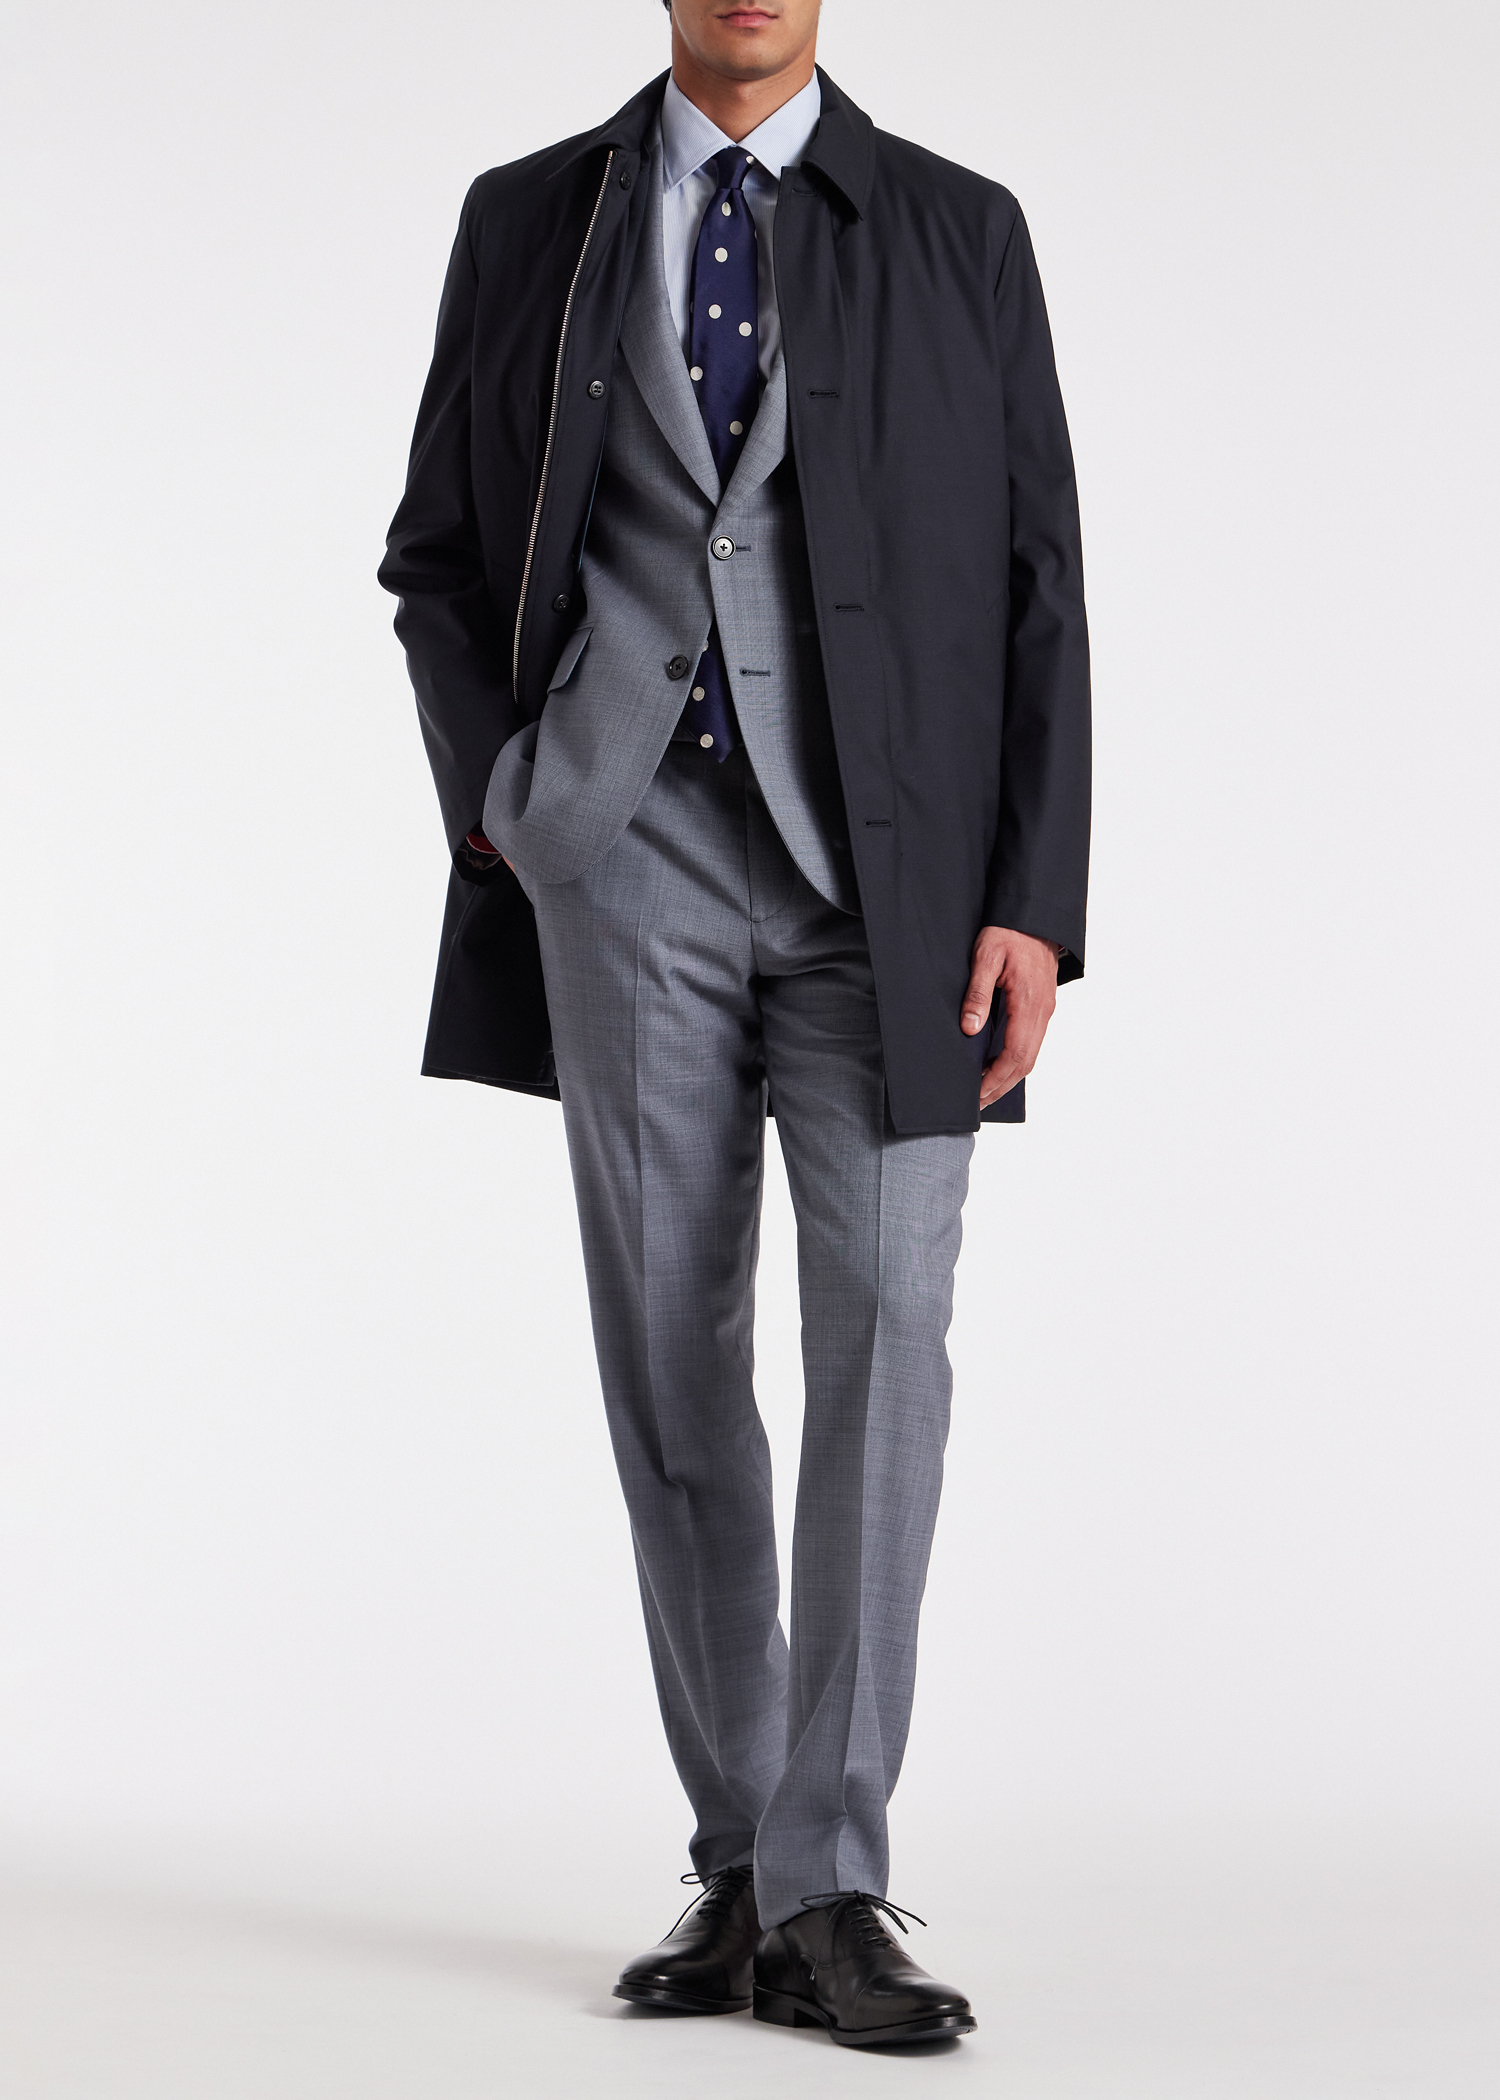 Designer Suits for Men | Paul Smith